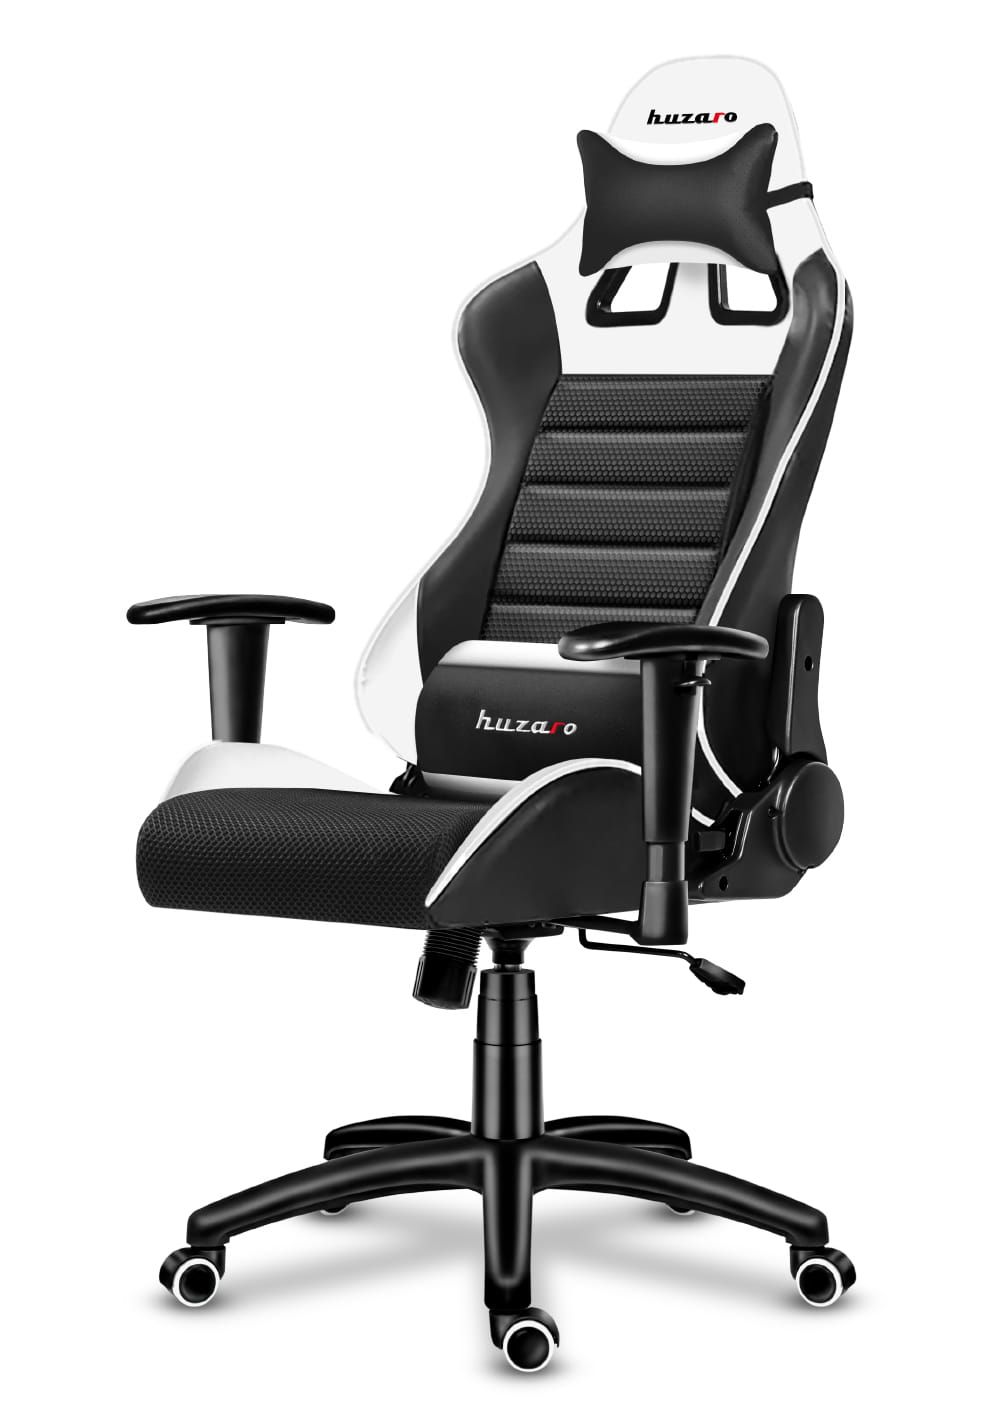 Huzaro Force 6.0 Universal gaming chair Mesh seat Black, White_5